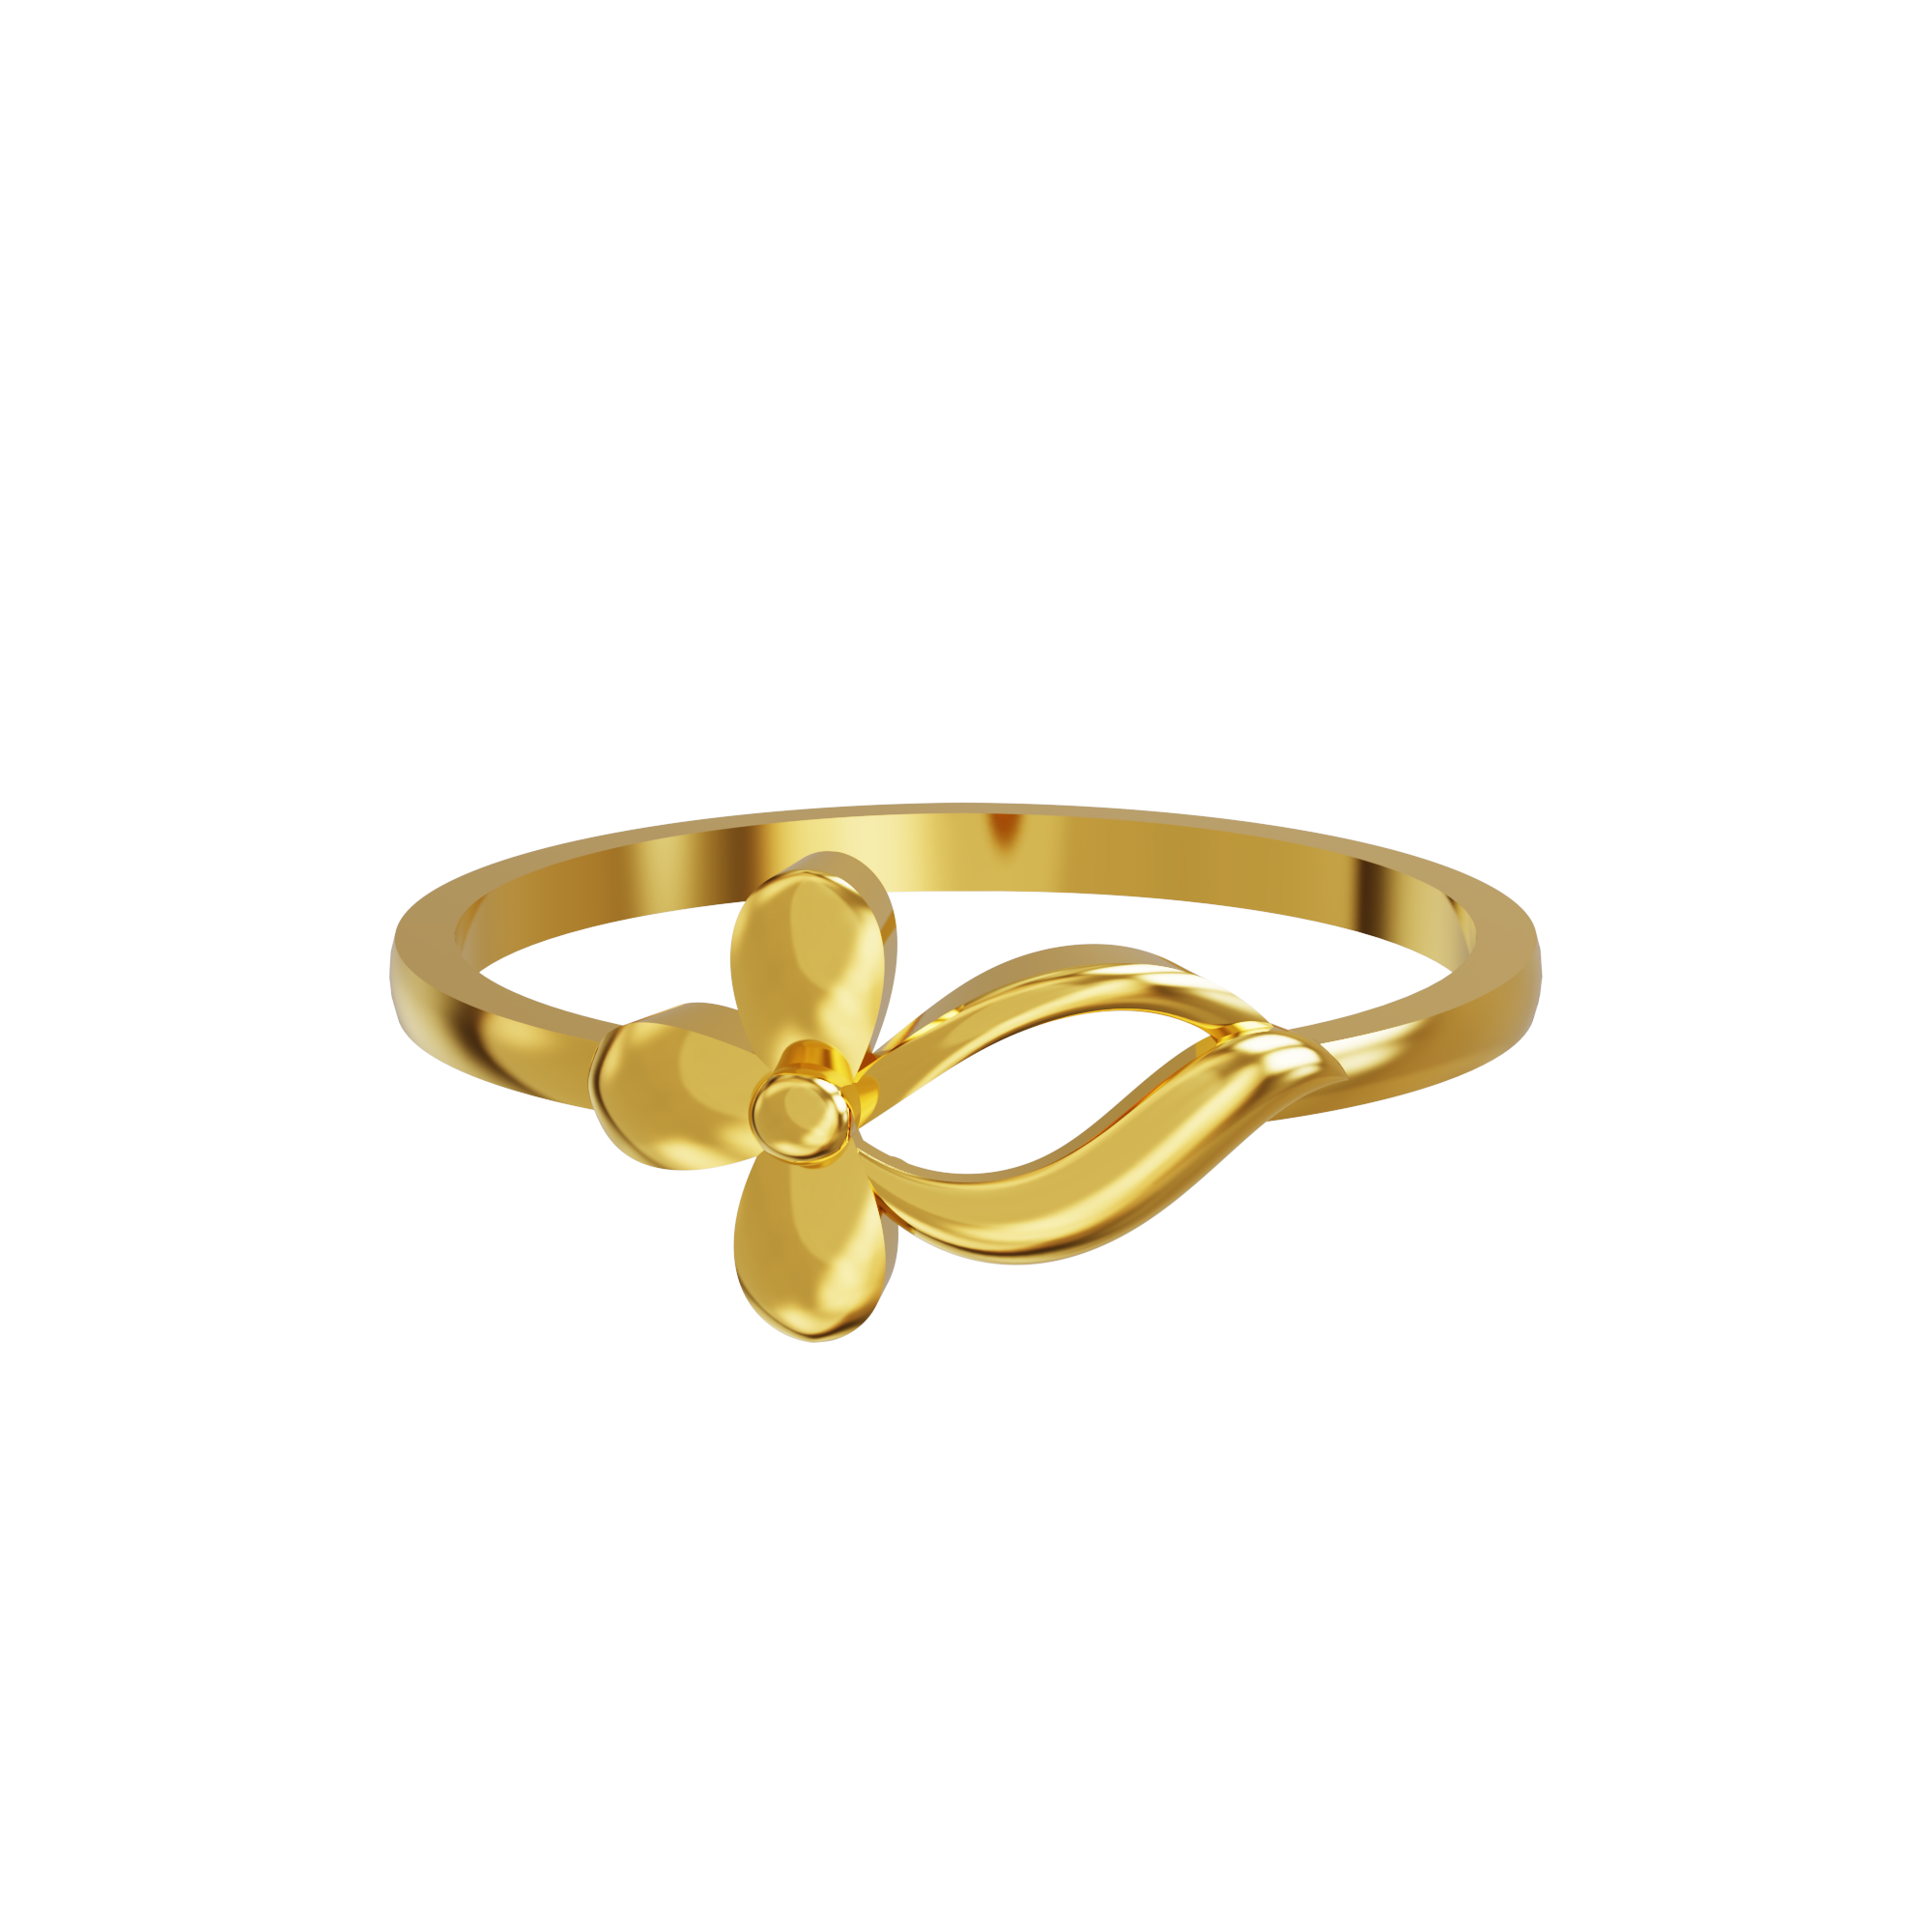 Tiffany Knot Ring in Yellow Gold | Tiffany & Co.